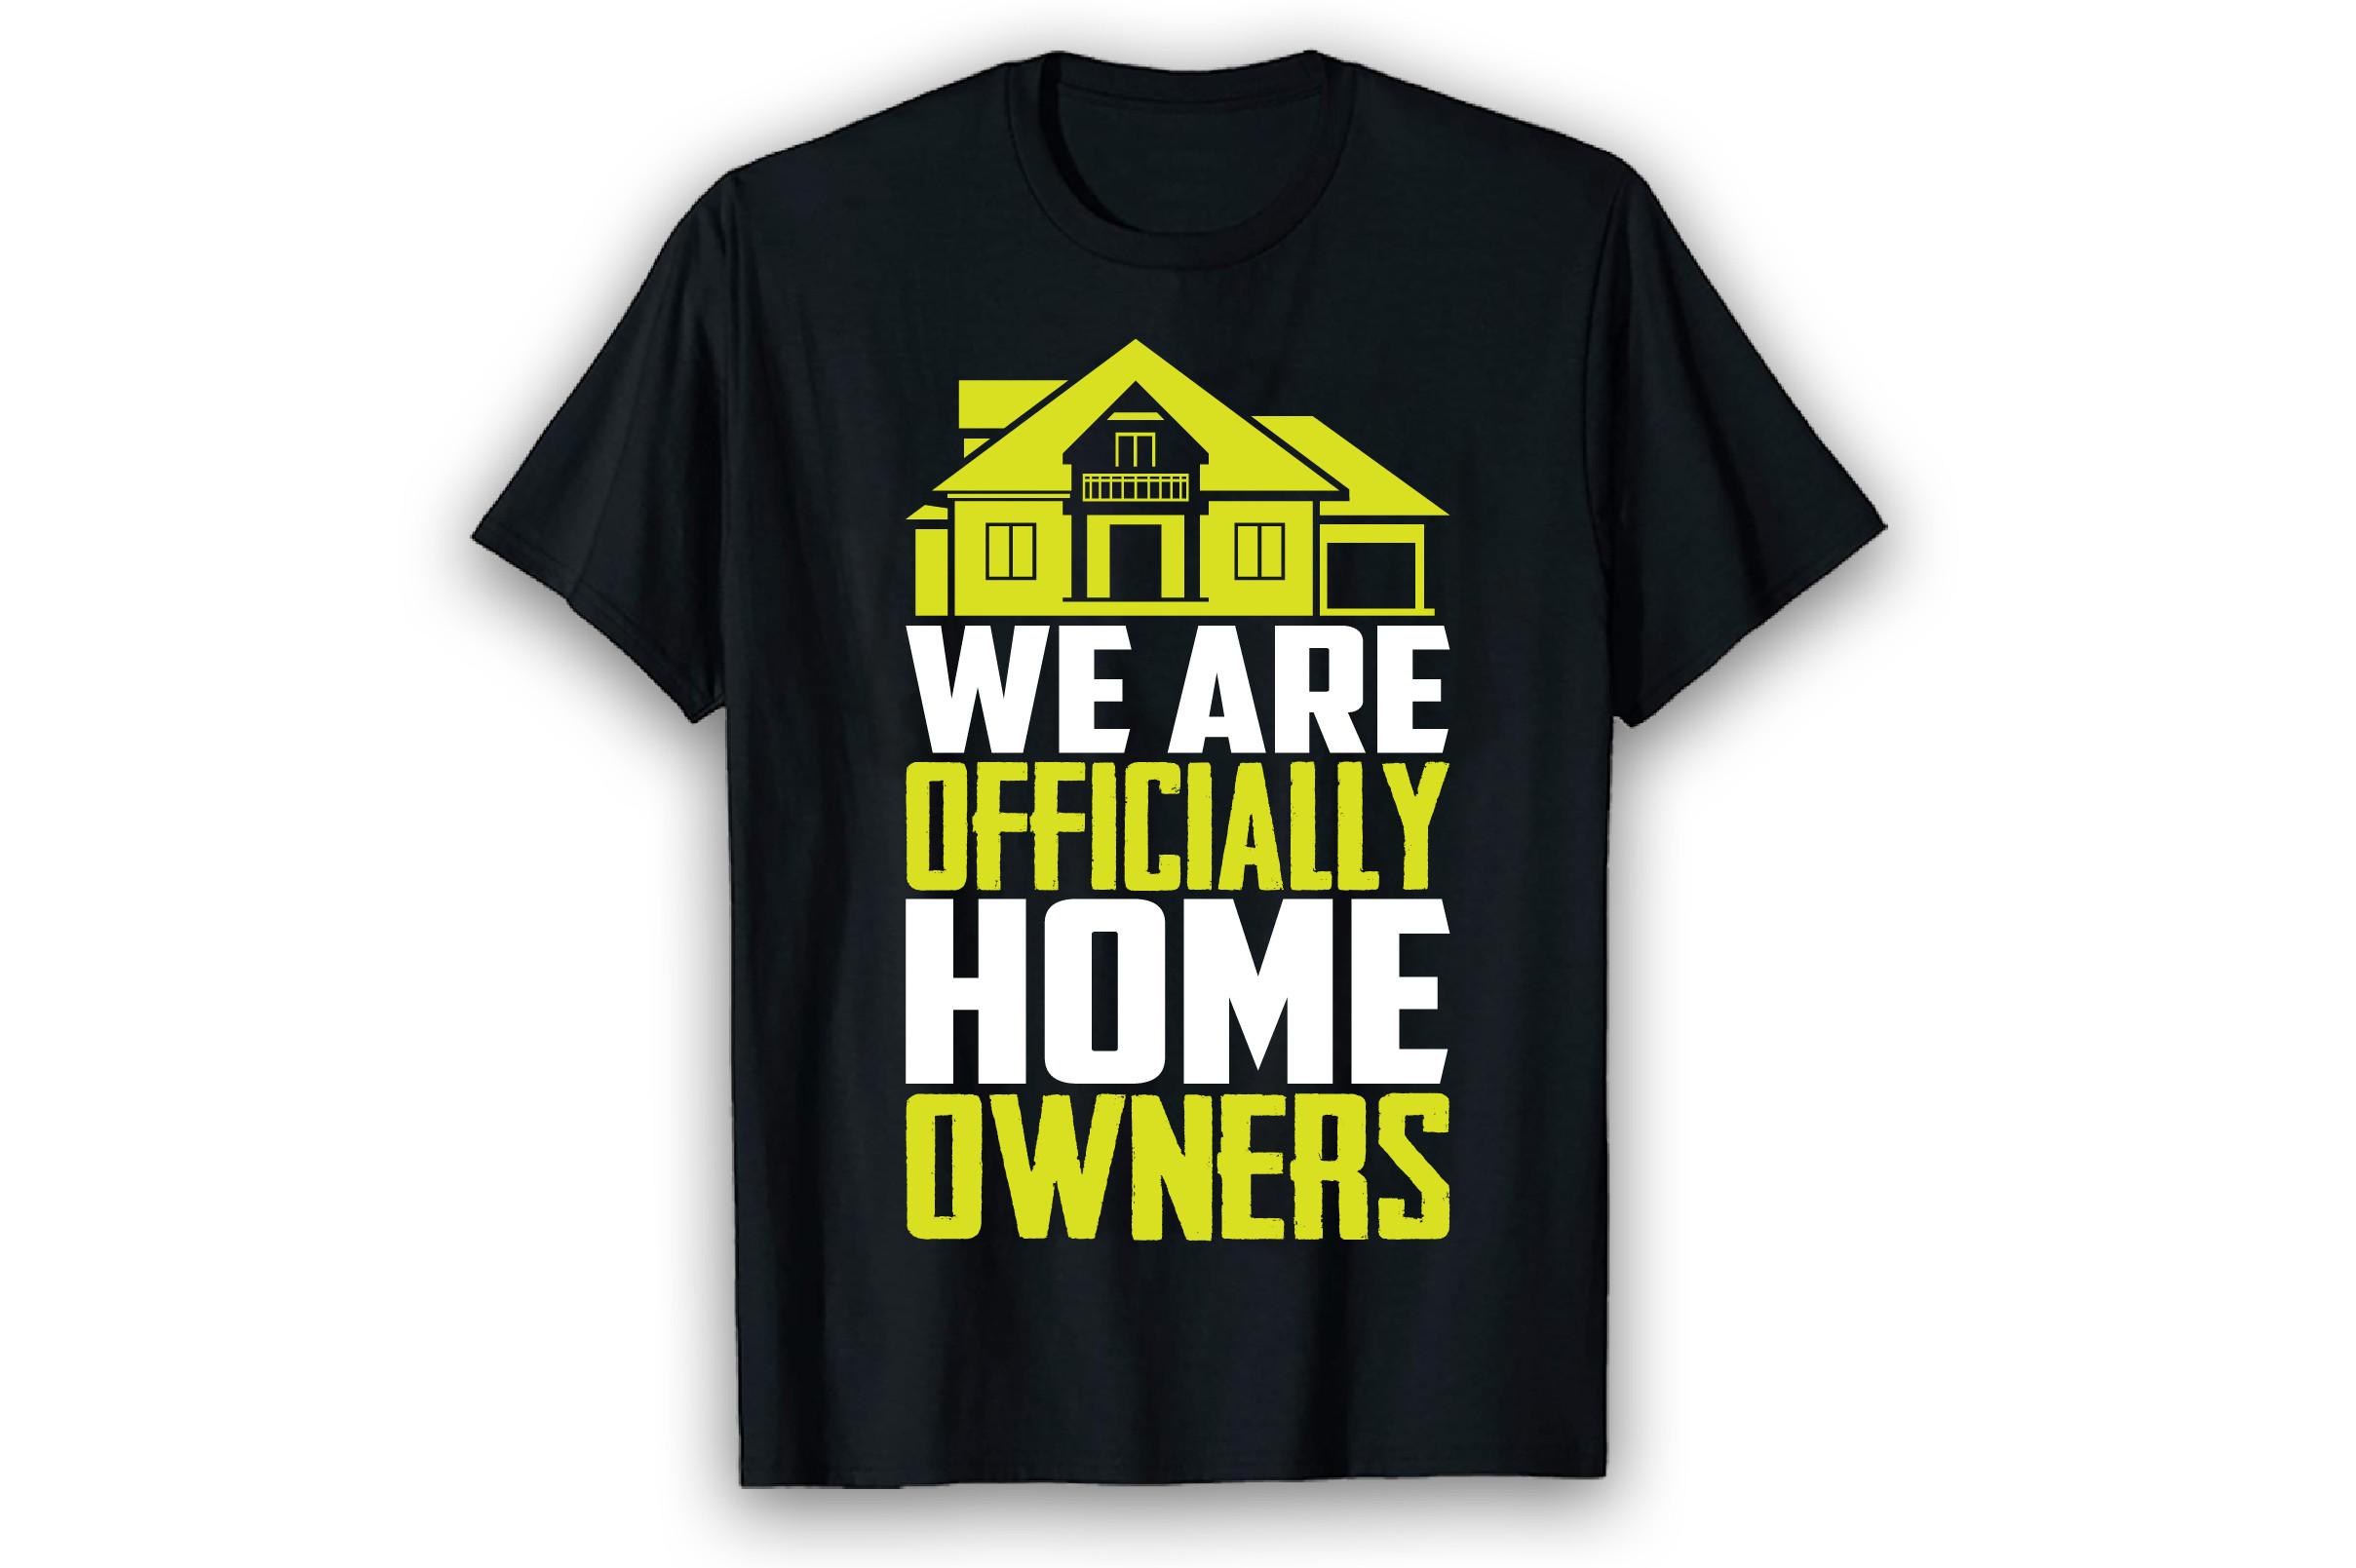 Officially | Homeowner T-Shirt Design